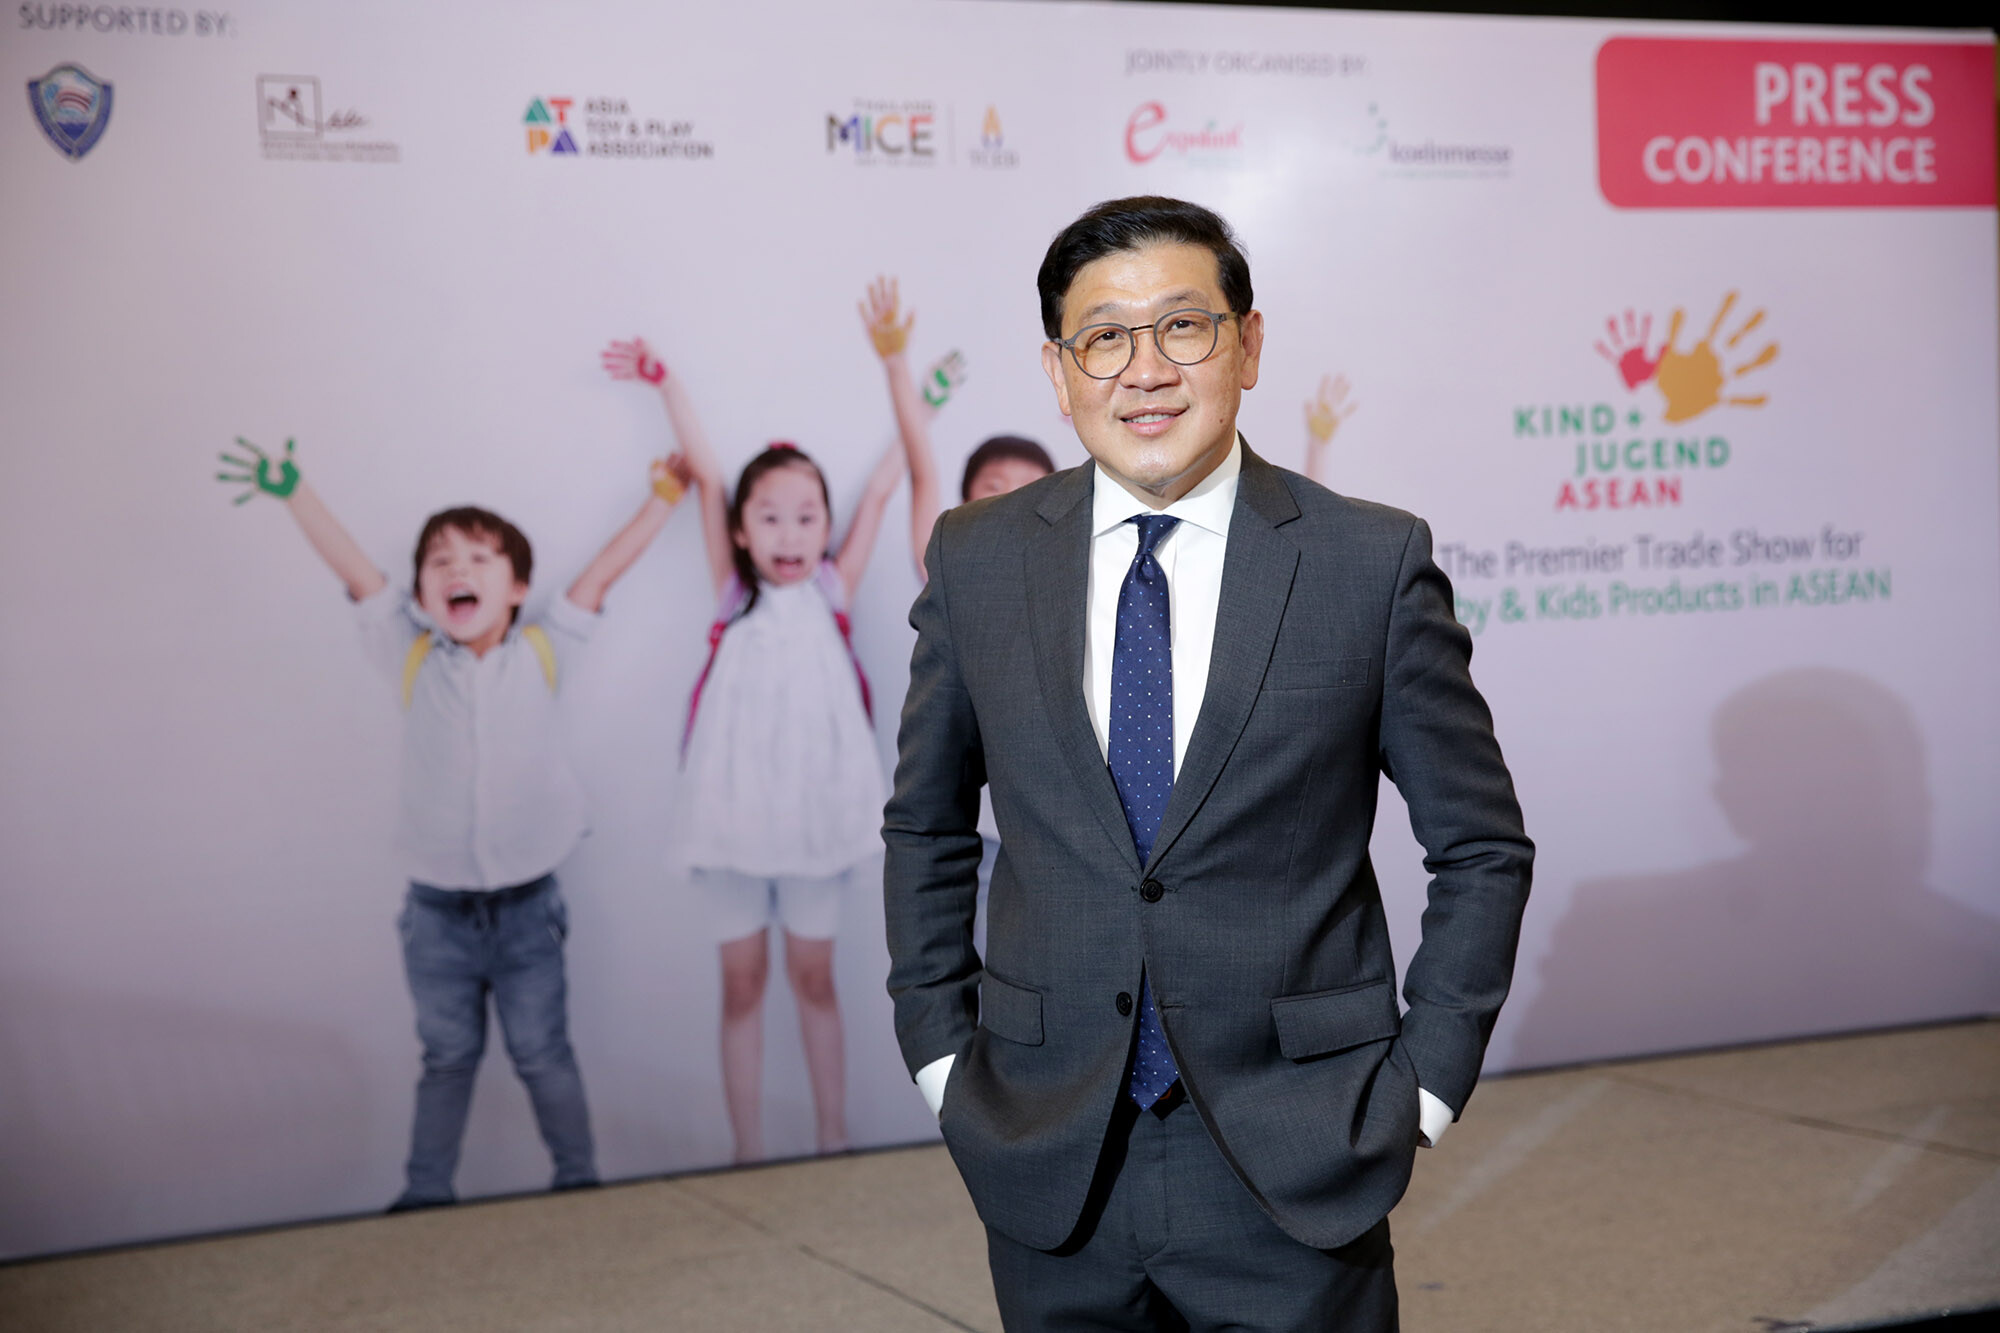 Kind + Jugend ASEAN 2023 พร้อมเดินหน้าสู่การผนึกอุตสาหกรรมผลิตภัณฑ์แม่และเด็ก ทั้งไทยและต่างชาติ คาดว่ามากที่สุดในภูมิภาคเอเชียแปซิฟิก